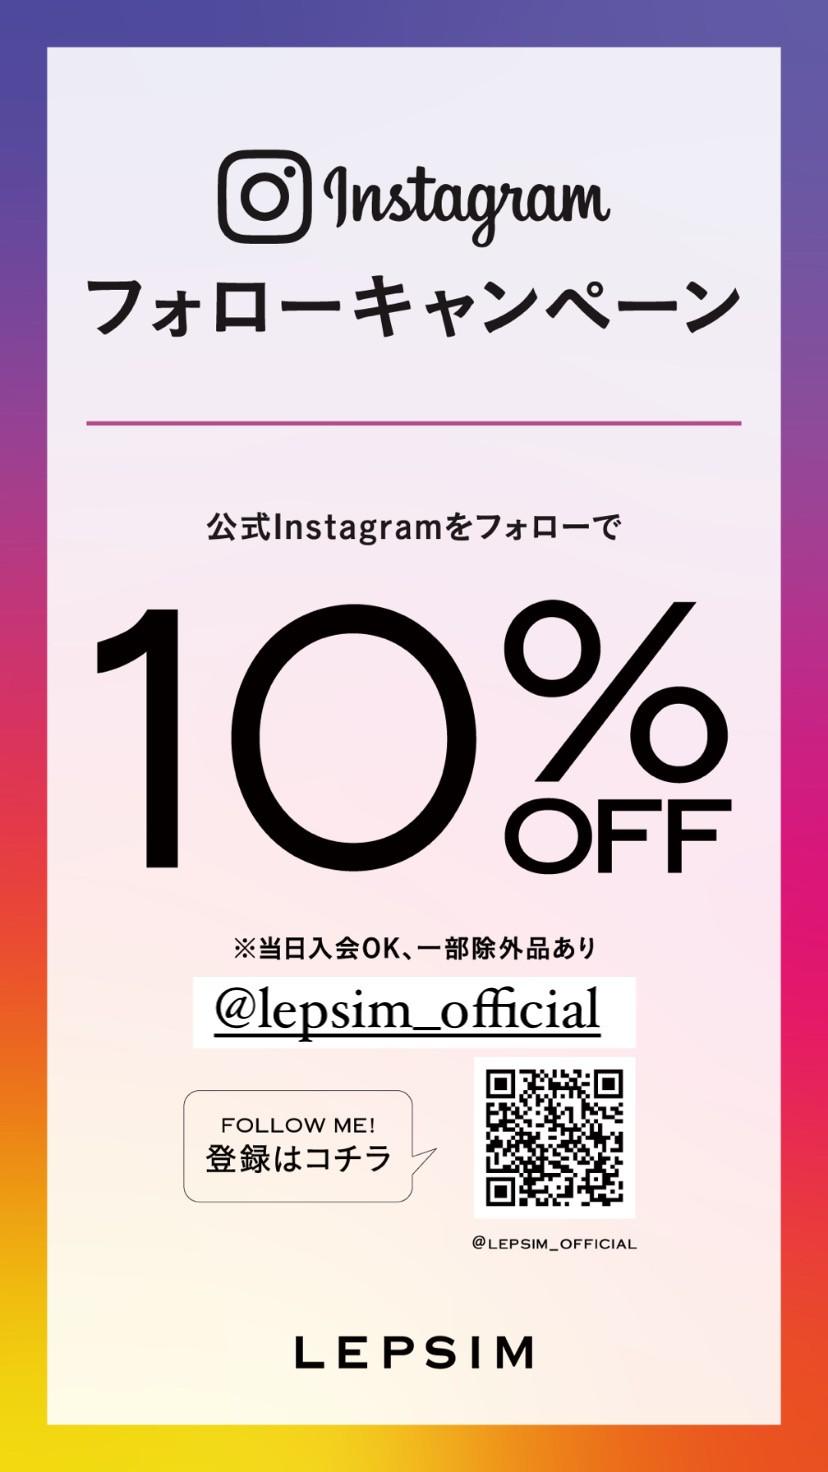 LEPSIM公式Instagramフォローキャンペーン